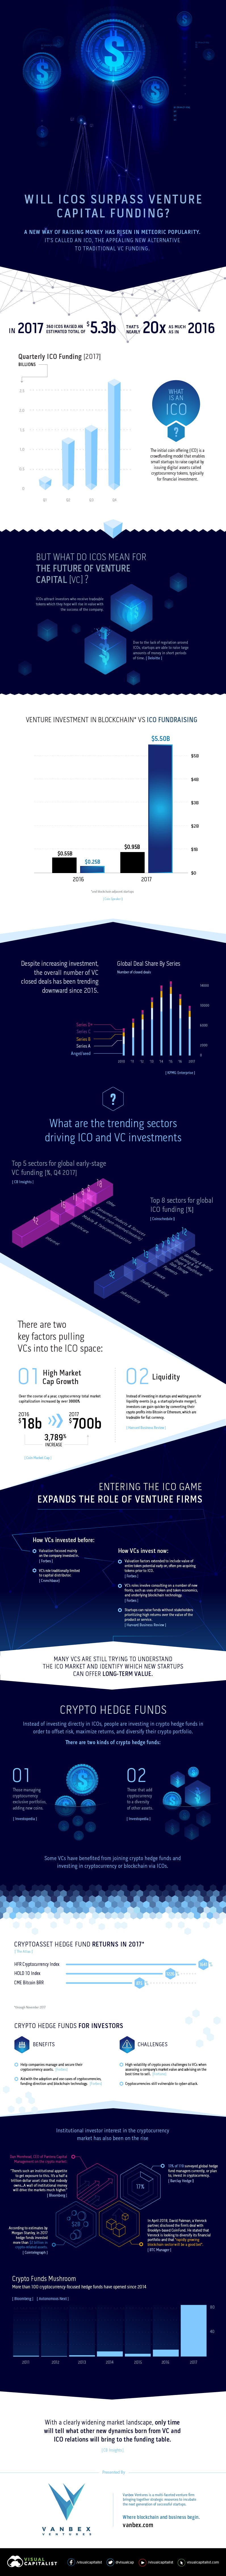 ICOs Venture Capital